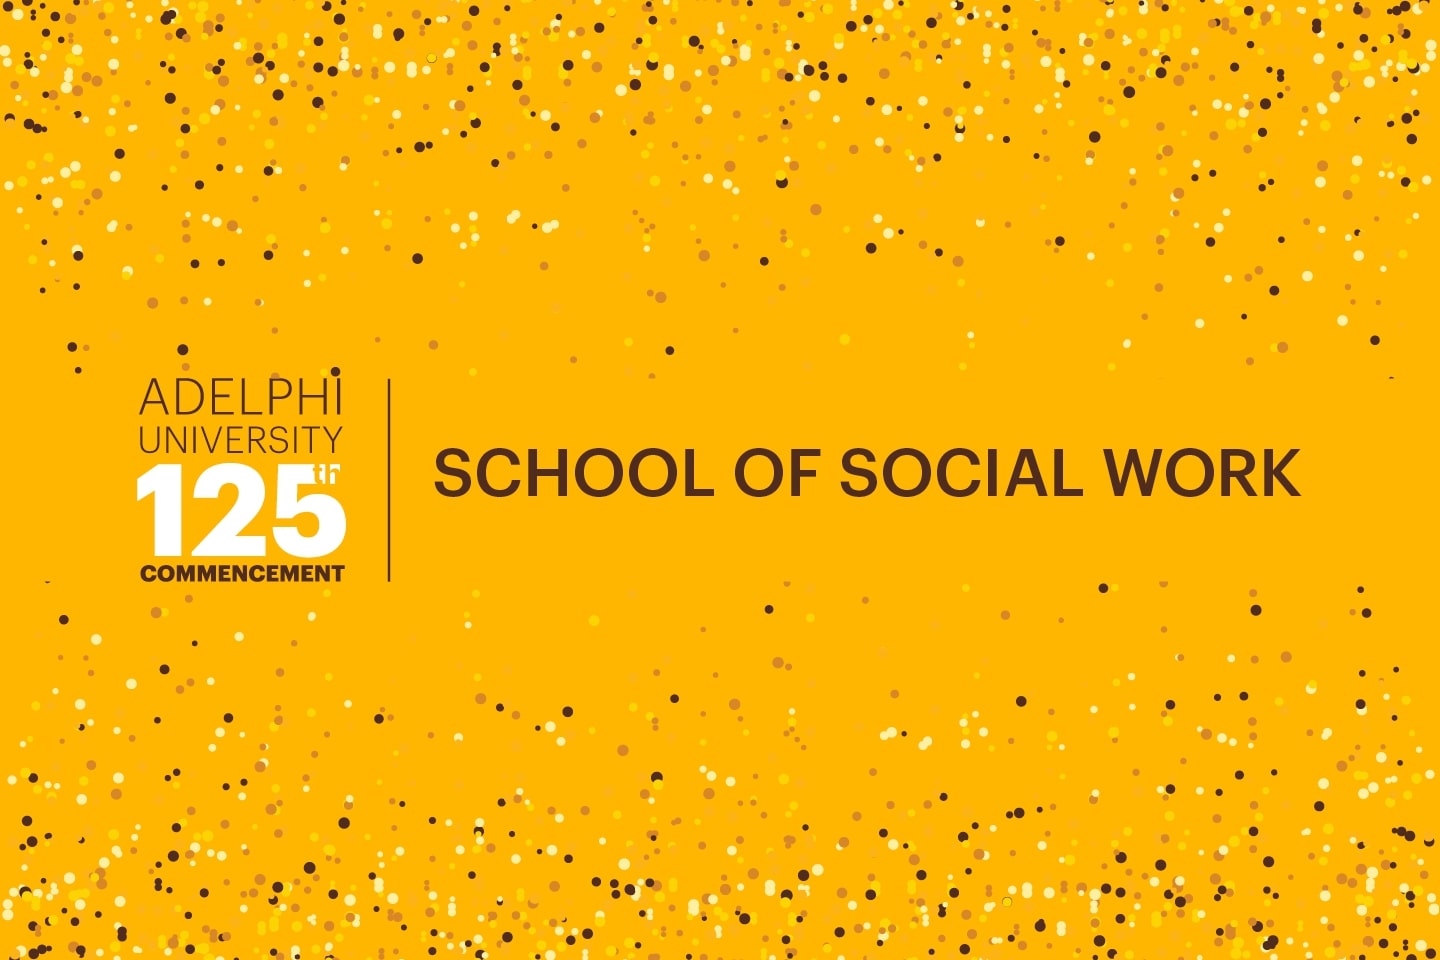 Adelphi University 125th Commencement: School of Social Work